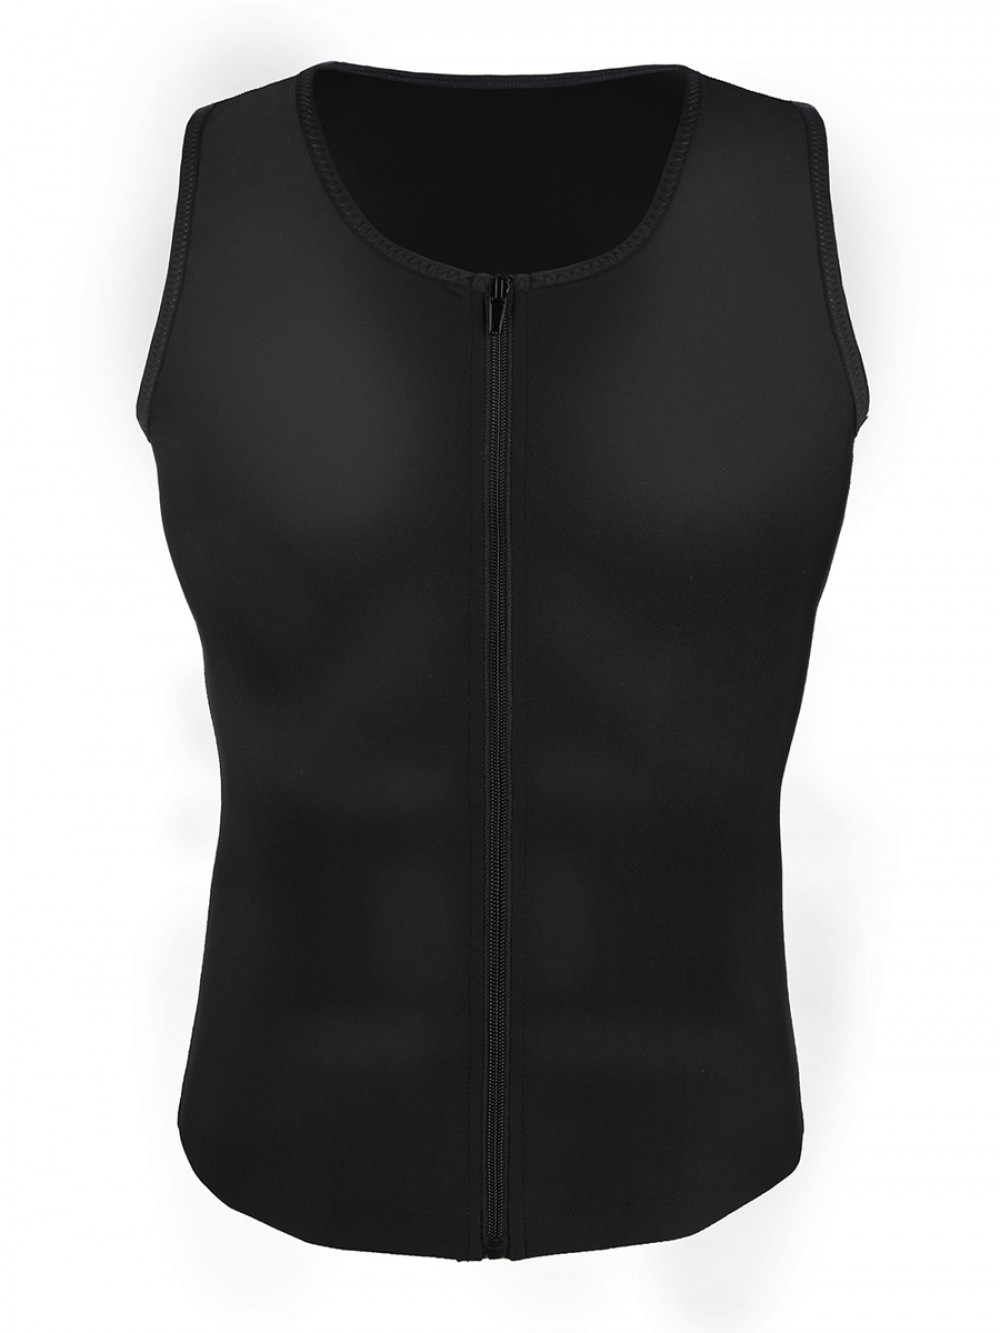 Abdominal Slimmer Black Men's Neoprene Slimming Vest With Zipper Midsection Control